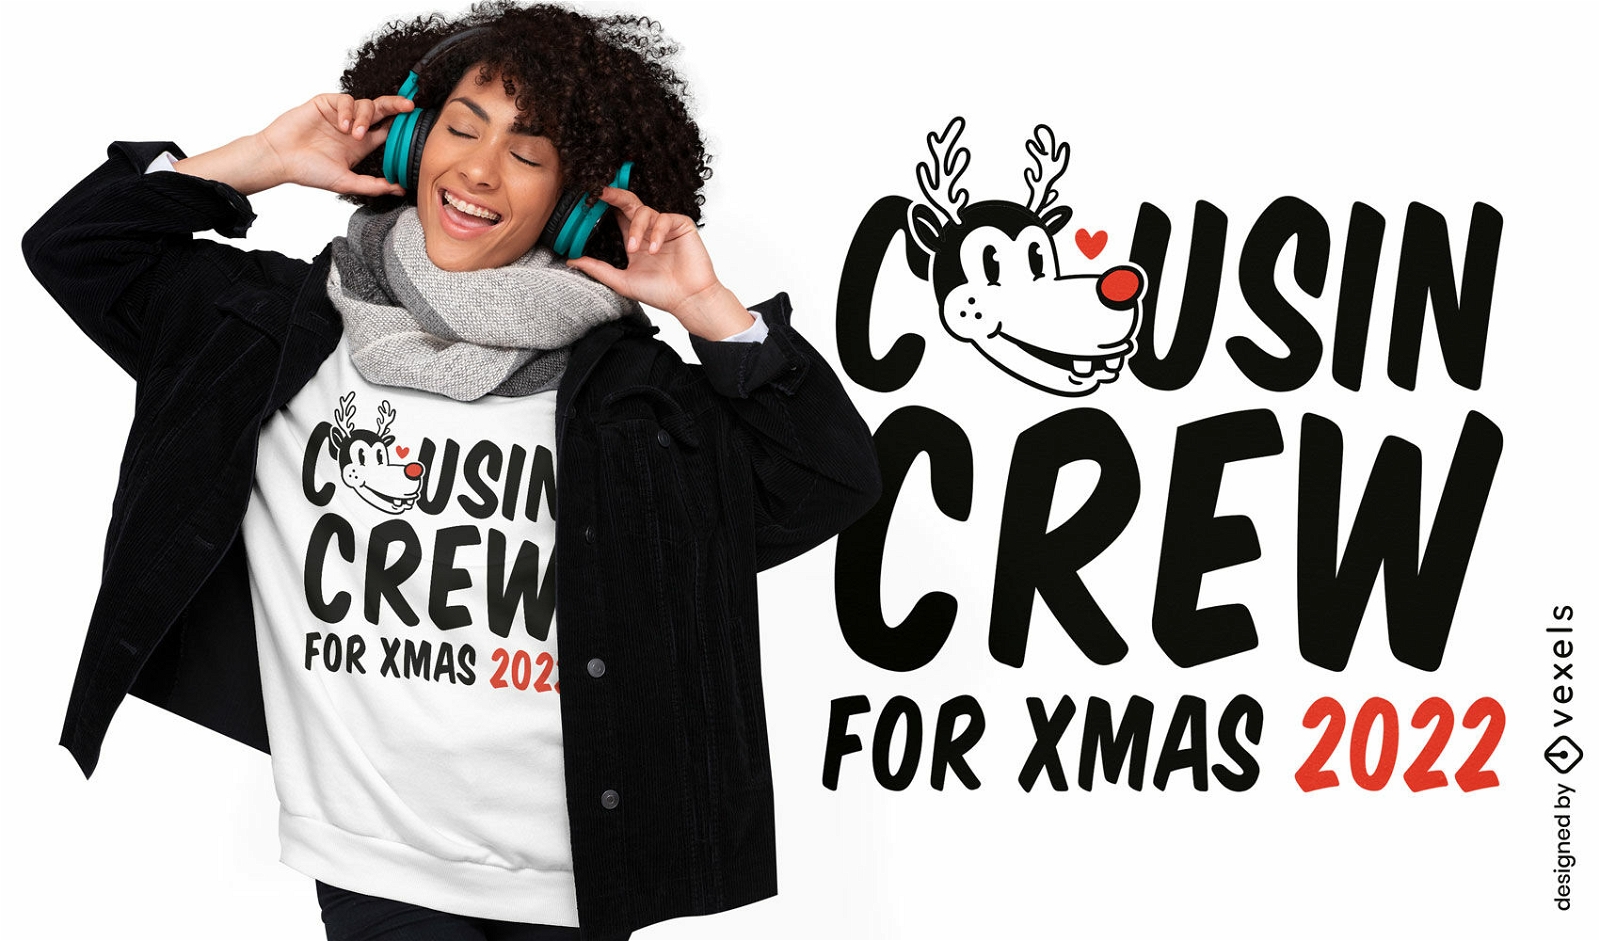 Christmas cousing crew t-shirt design